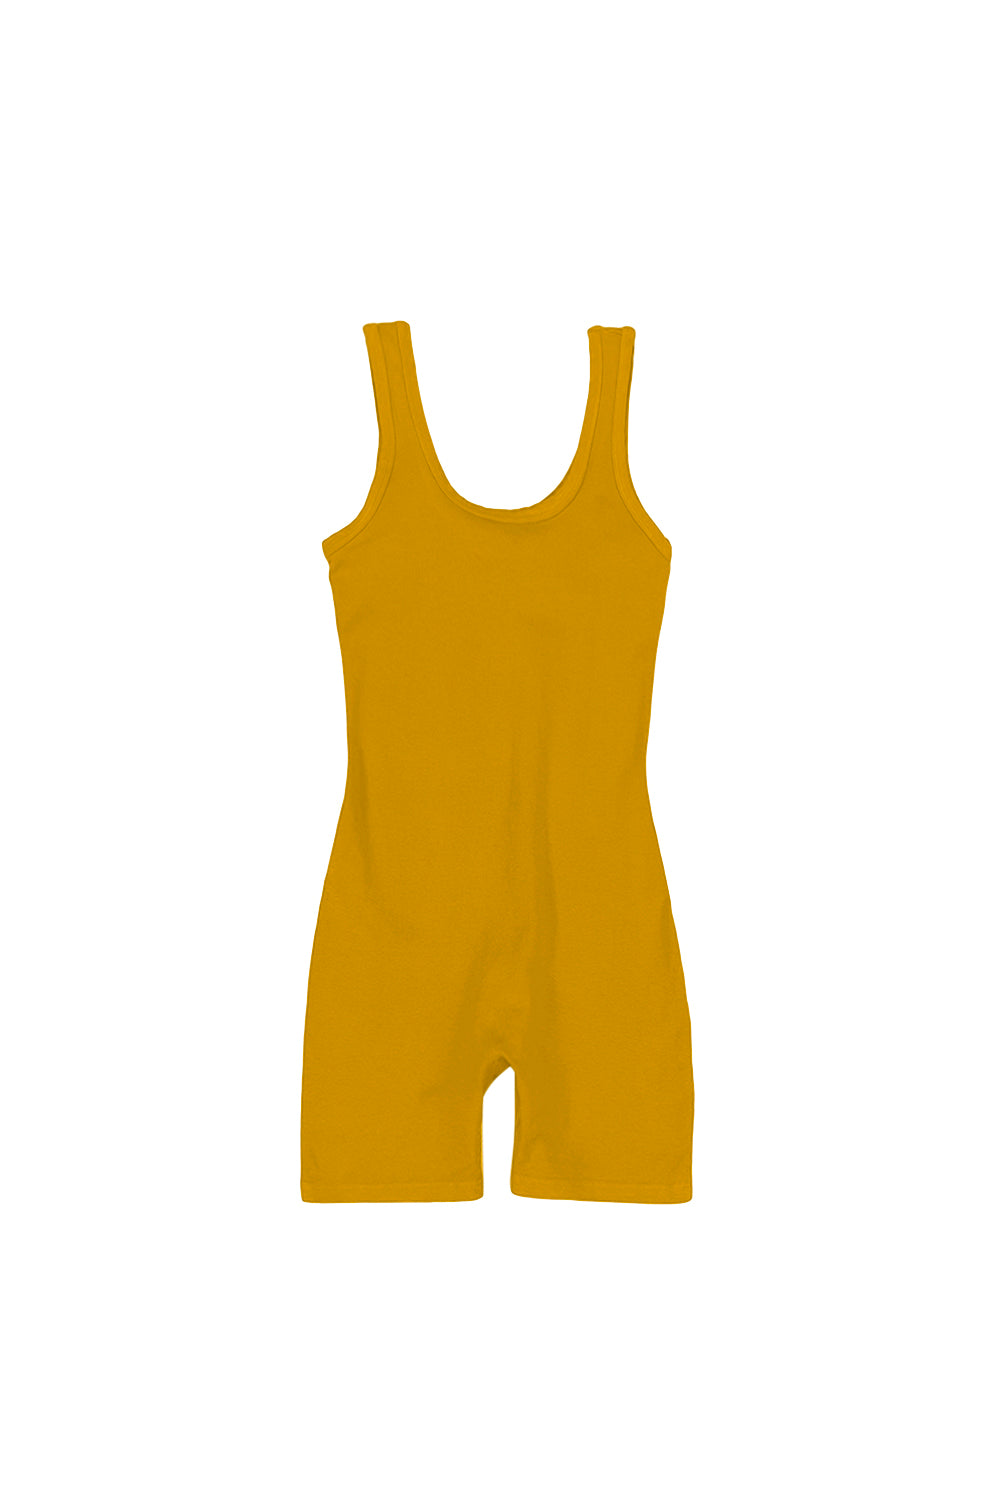 Singlet | Jungmaven Hemp Clothing & Accessories / Color: Spicy Mustard